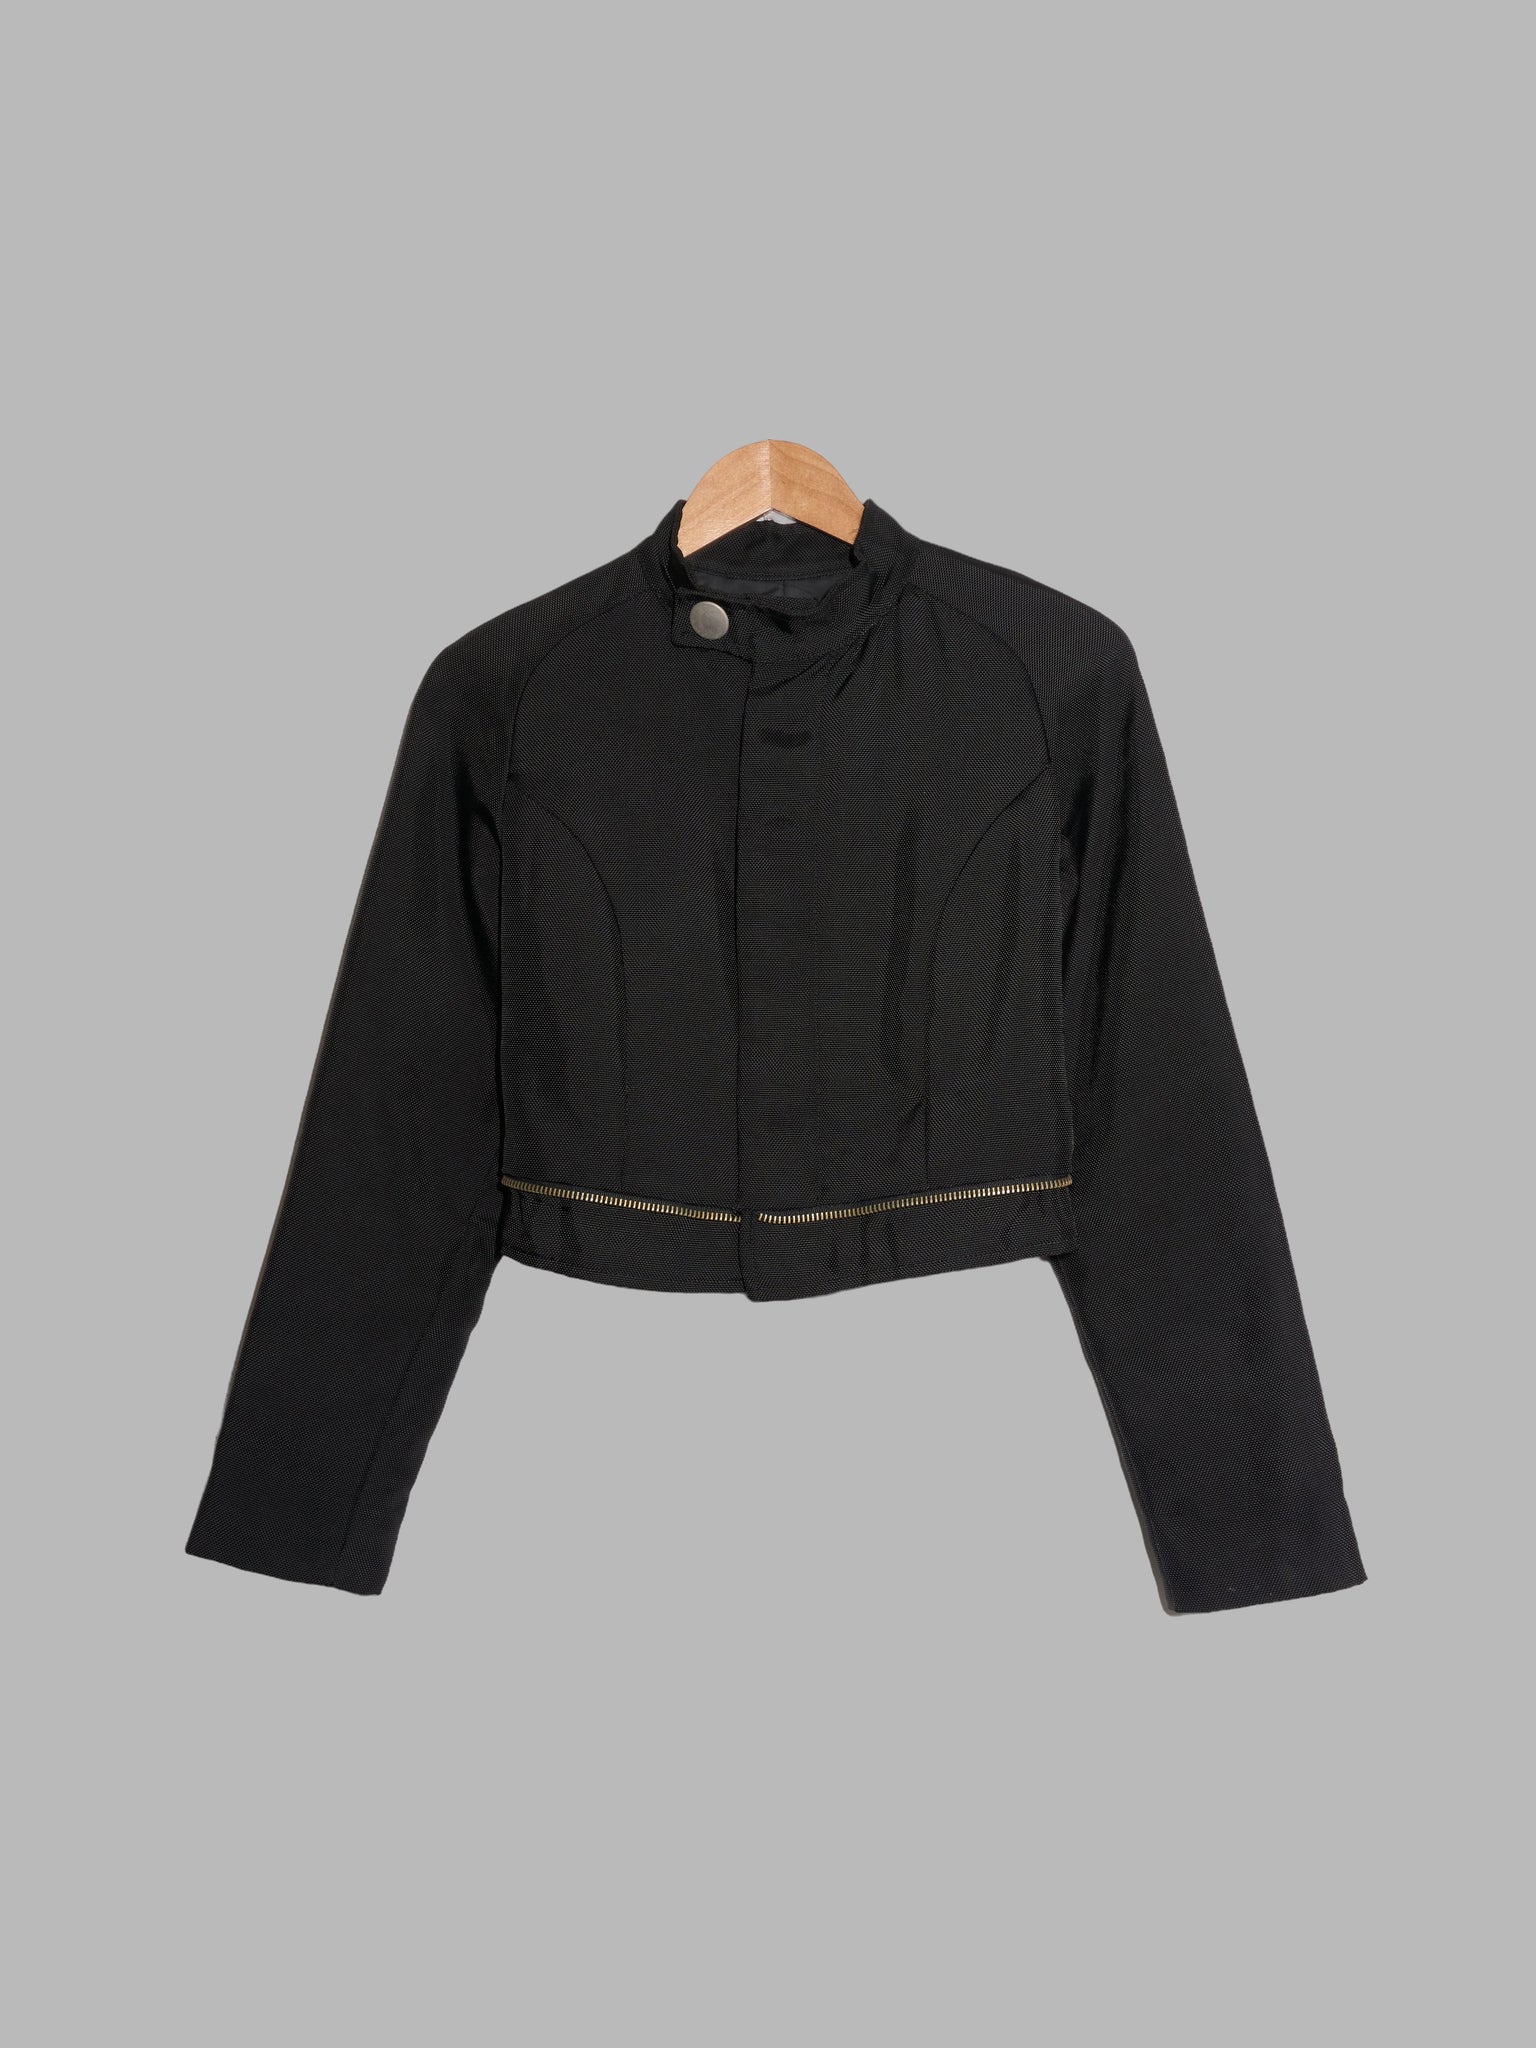 Dirk Bikkembergs winter 1996 black ballistic nylon jacket with detachable hem